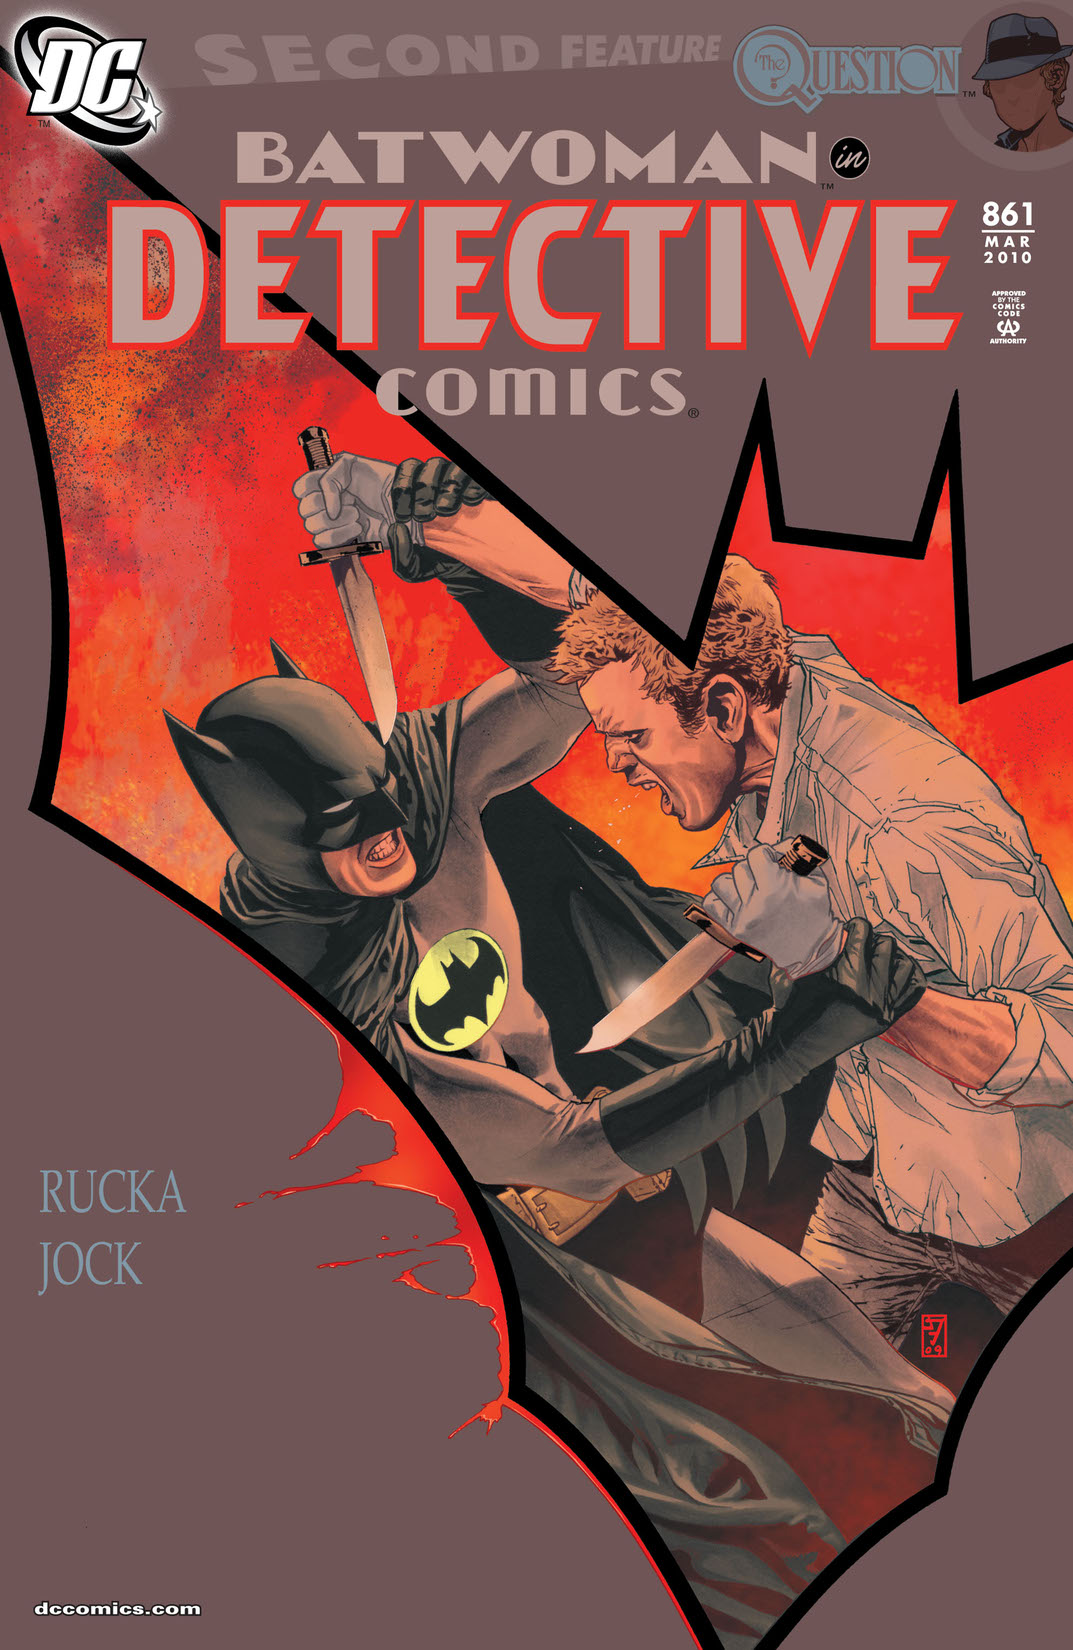 Detective Comics (1937-) #861 preview images